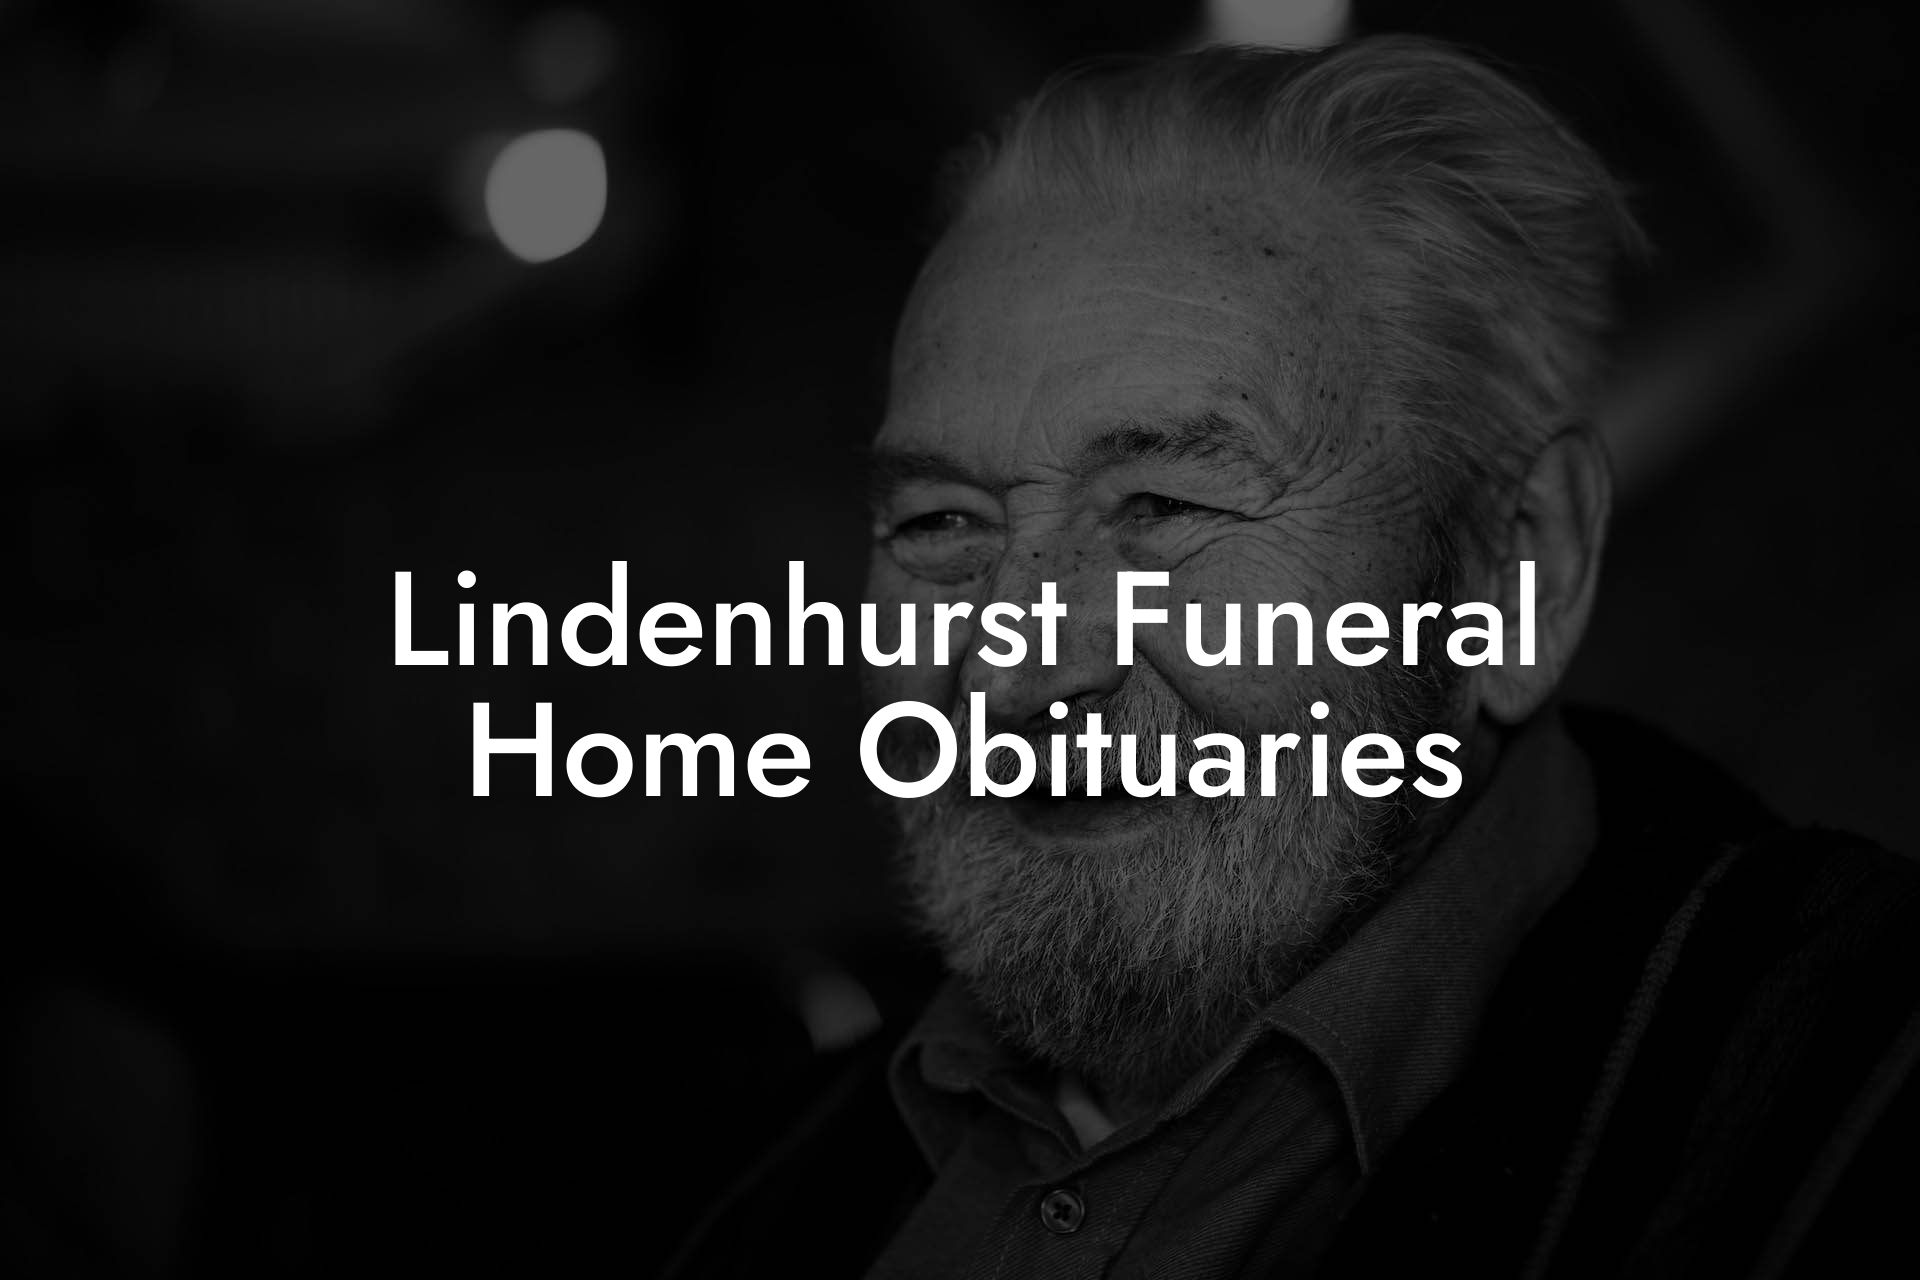 Lindenhurst Funeral Home Obituaries